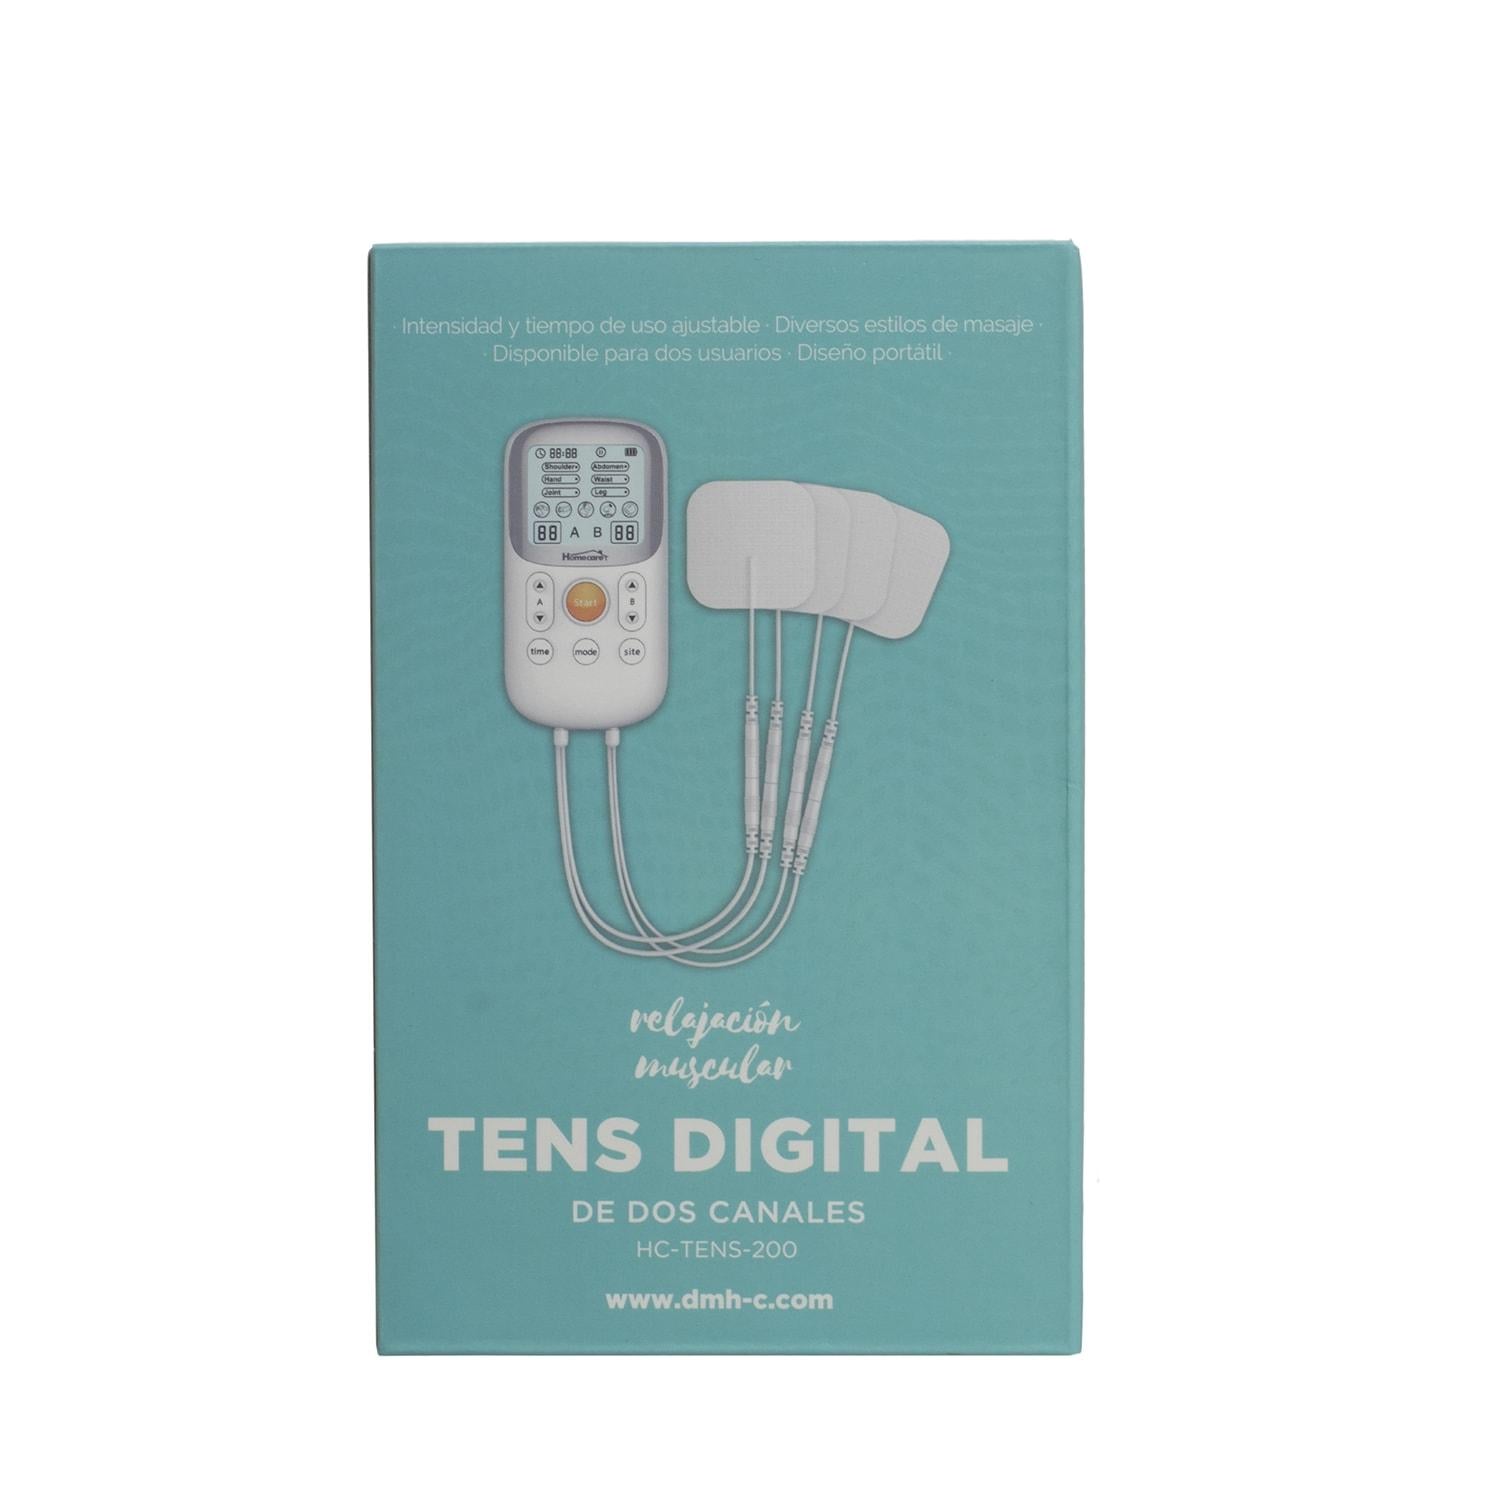 Electroestimulador TENS digital Cat. HCR-TENS-200 Home Care » ProSalud